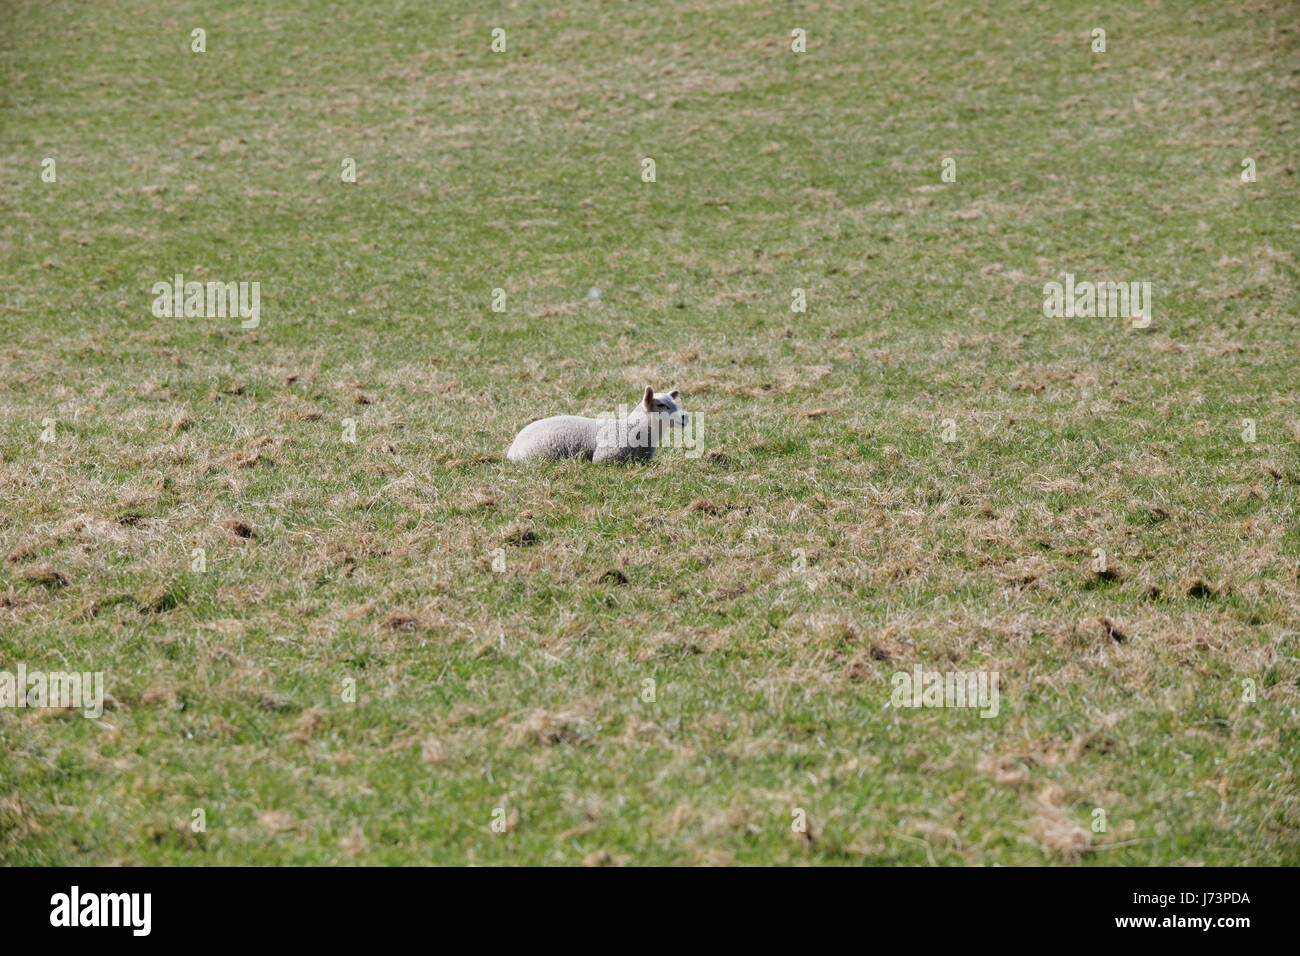 Chatelherault Country Park sheep in a field lambs Ewe Stock Photo